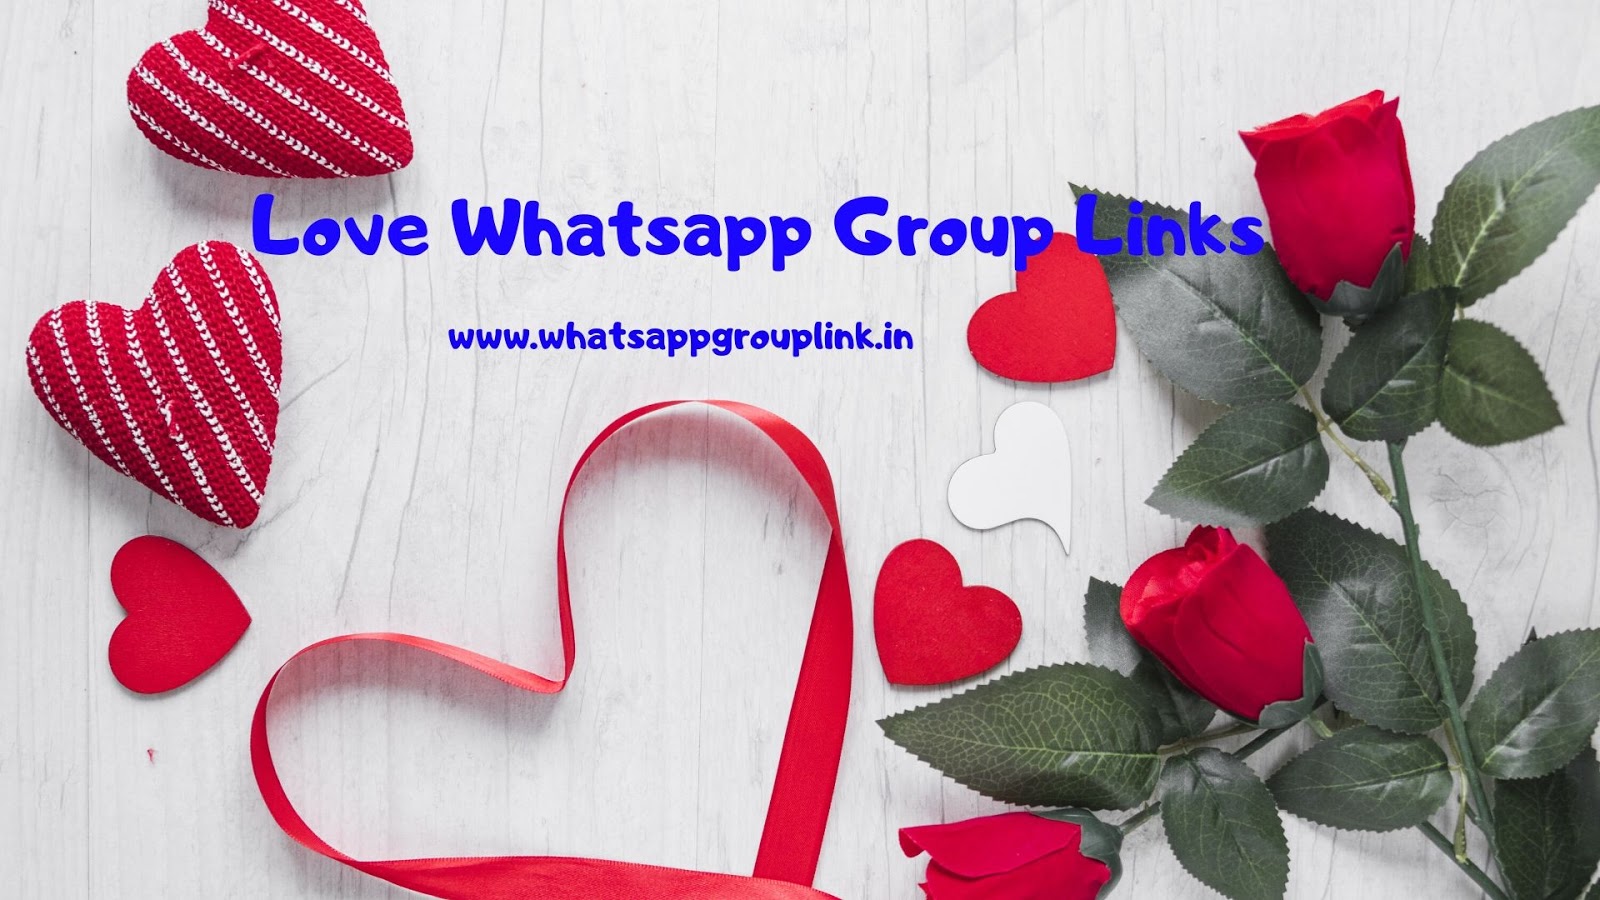 Hot Bebyxxx Com - Love Whatsapp Group Links - WhatsappGroupLink